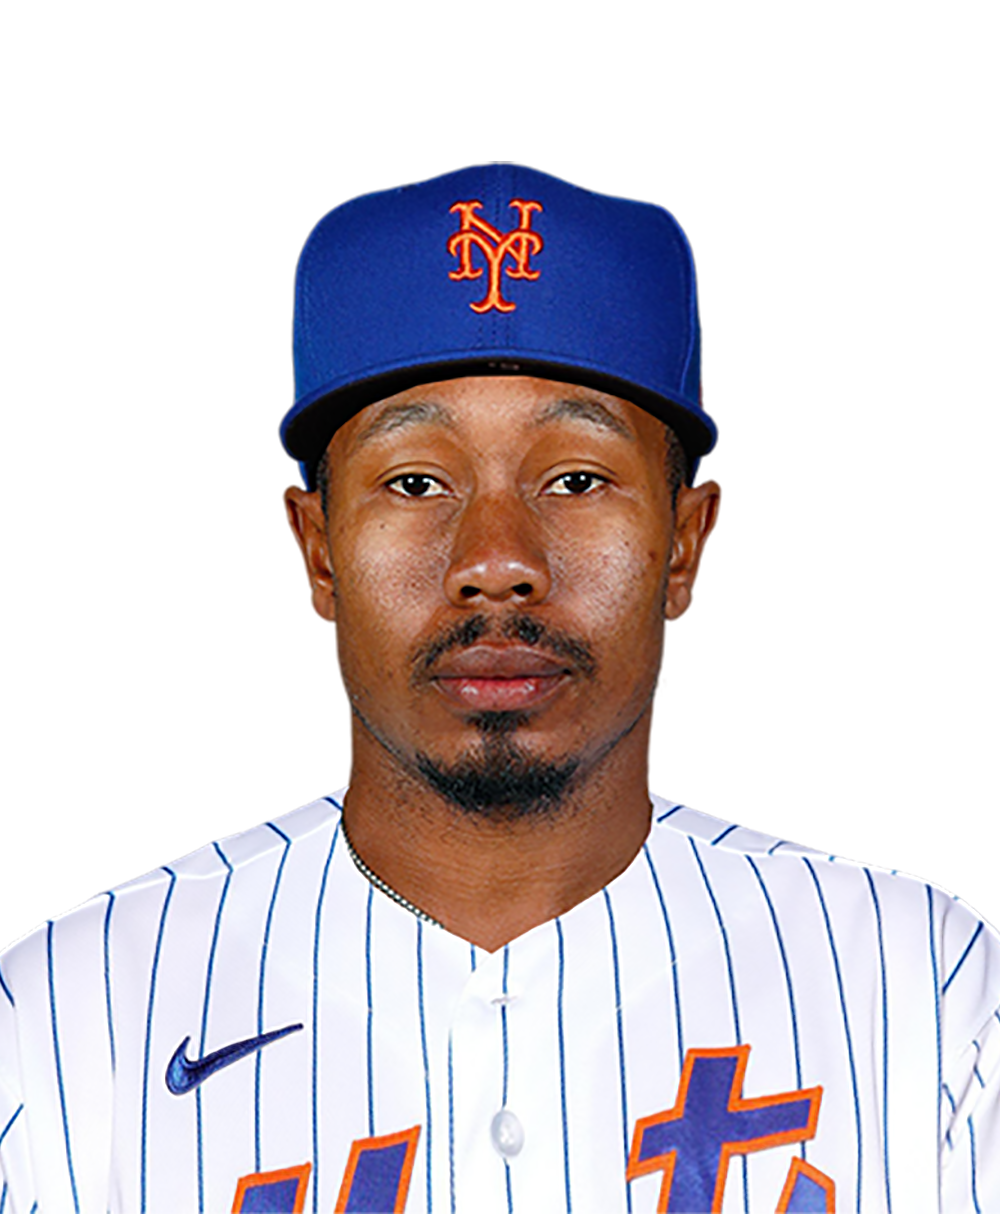 New York Mets Alternate Uniform - National League (NL) - Chris